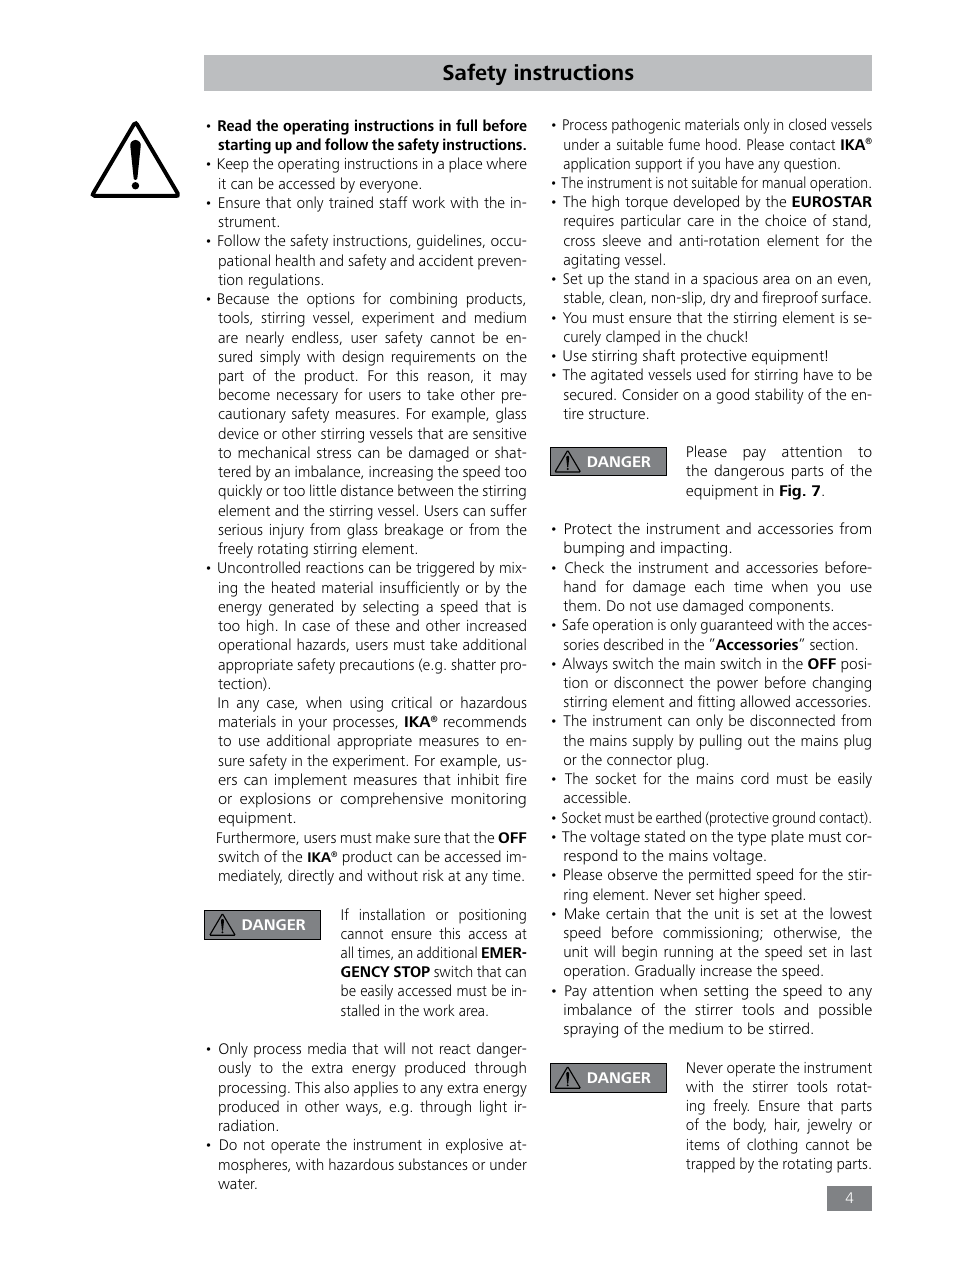 Safety instructions | IKA EUROSTAR 200 digital User Manual | Page 4 / 12